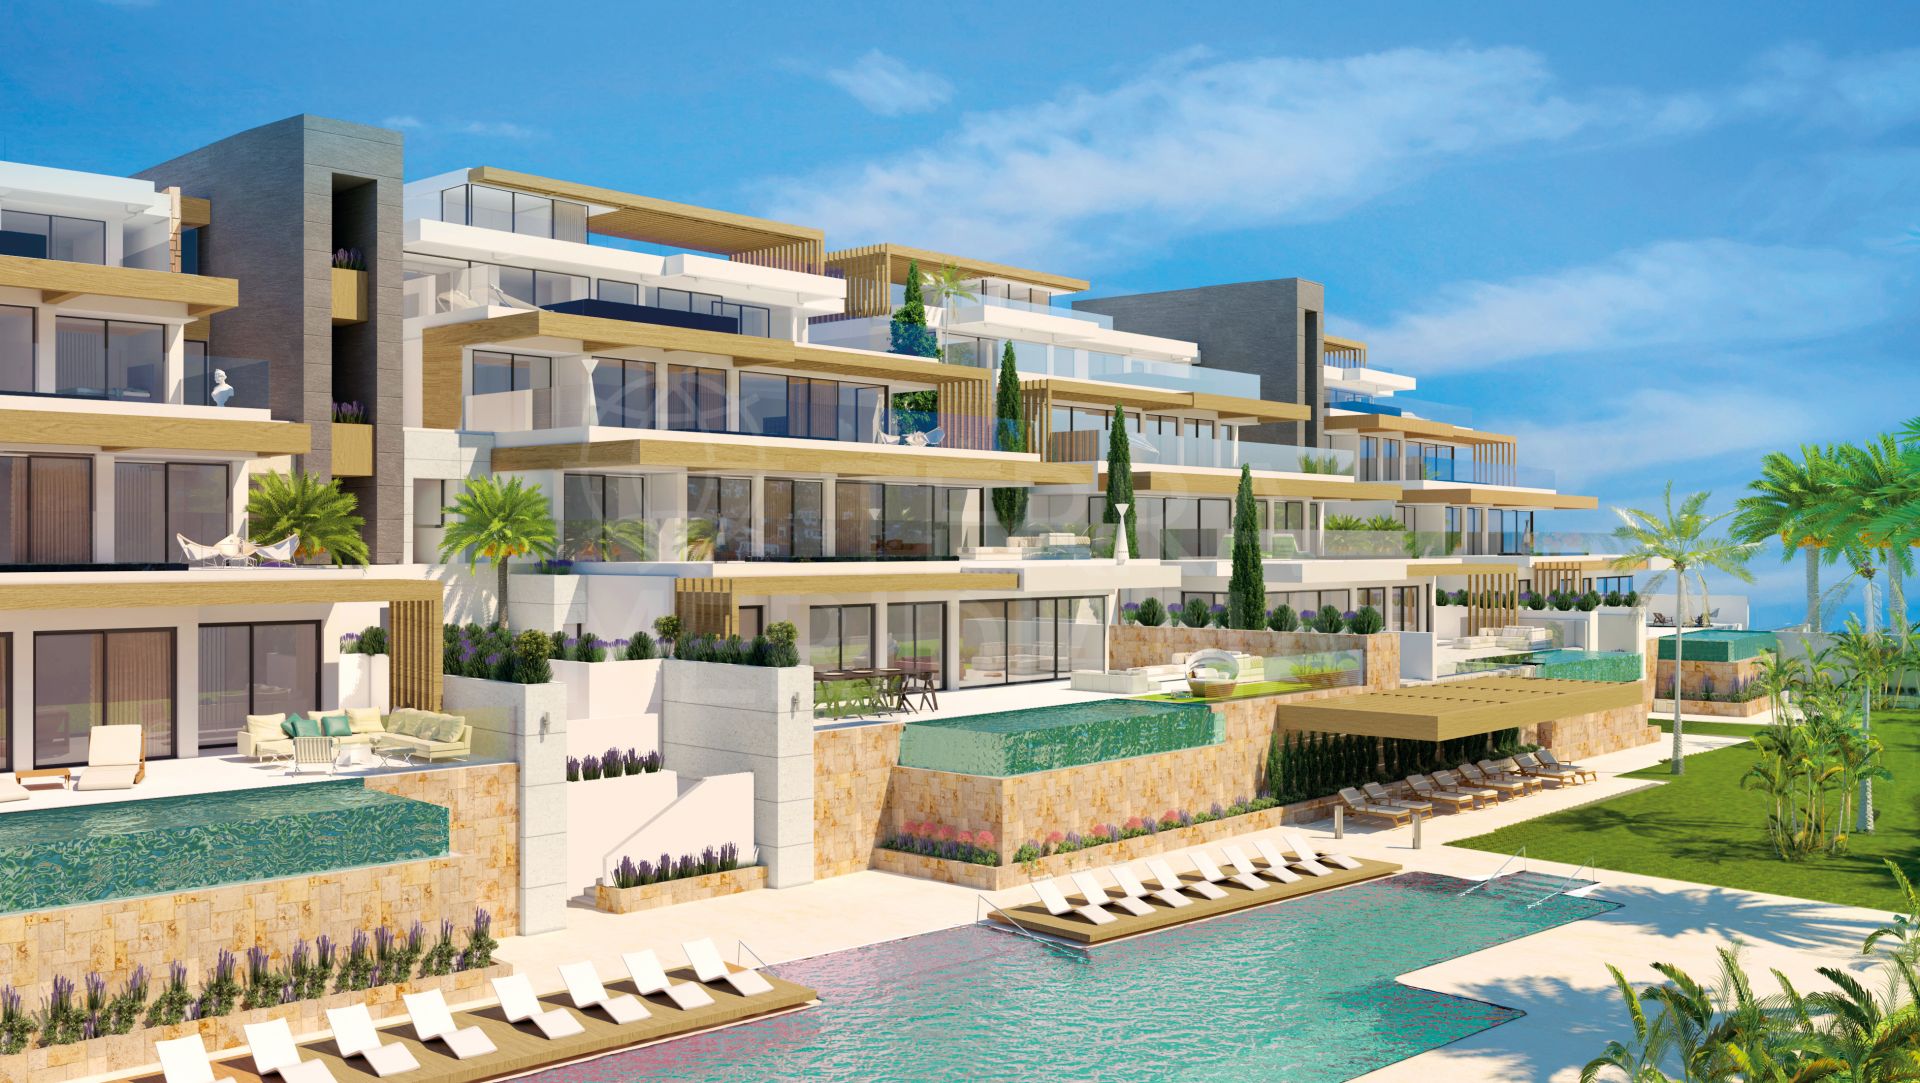 Magnificent brand new luxury 3 bedroom duplex penthouse for sale in El Paraiso, Benahavis